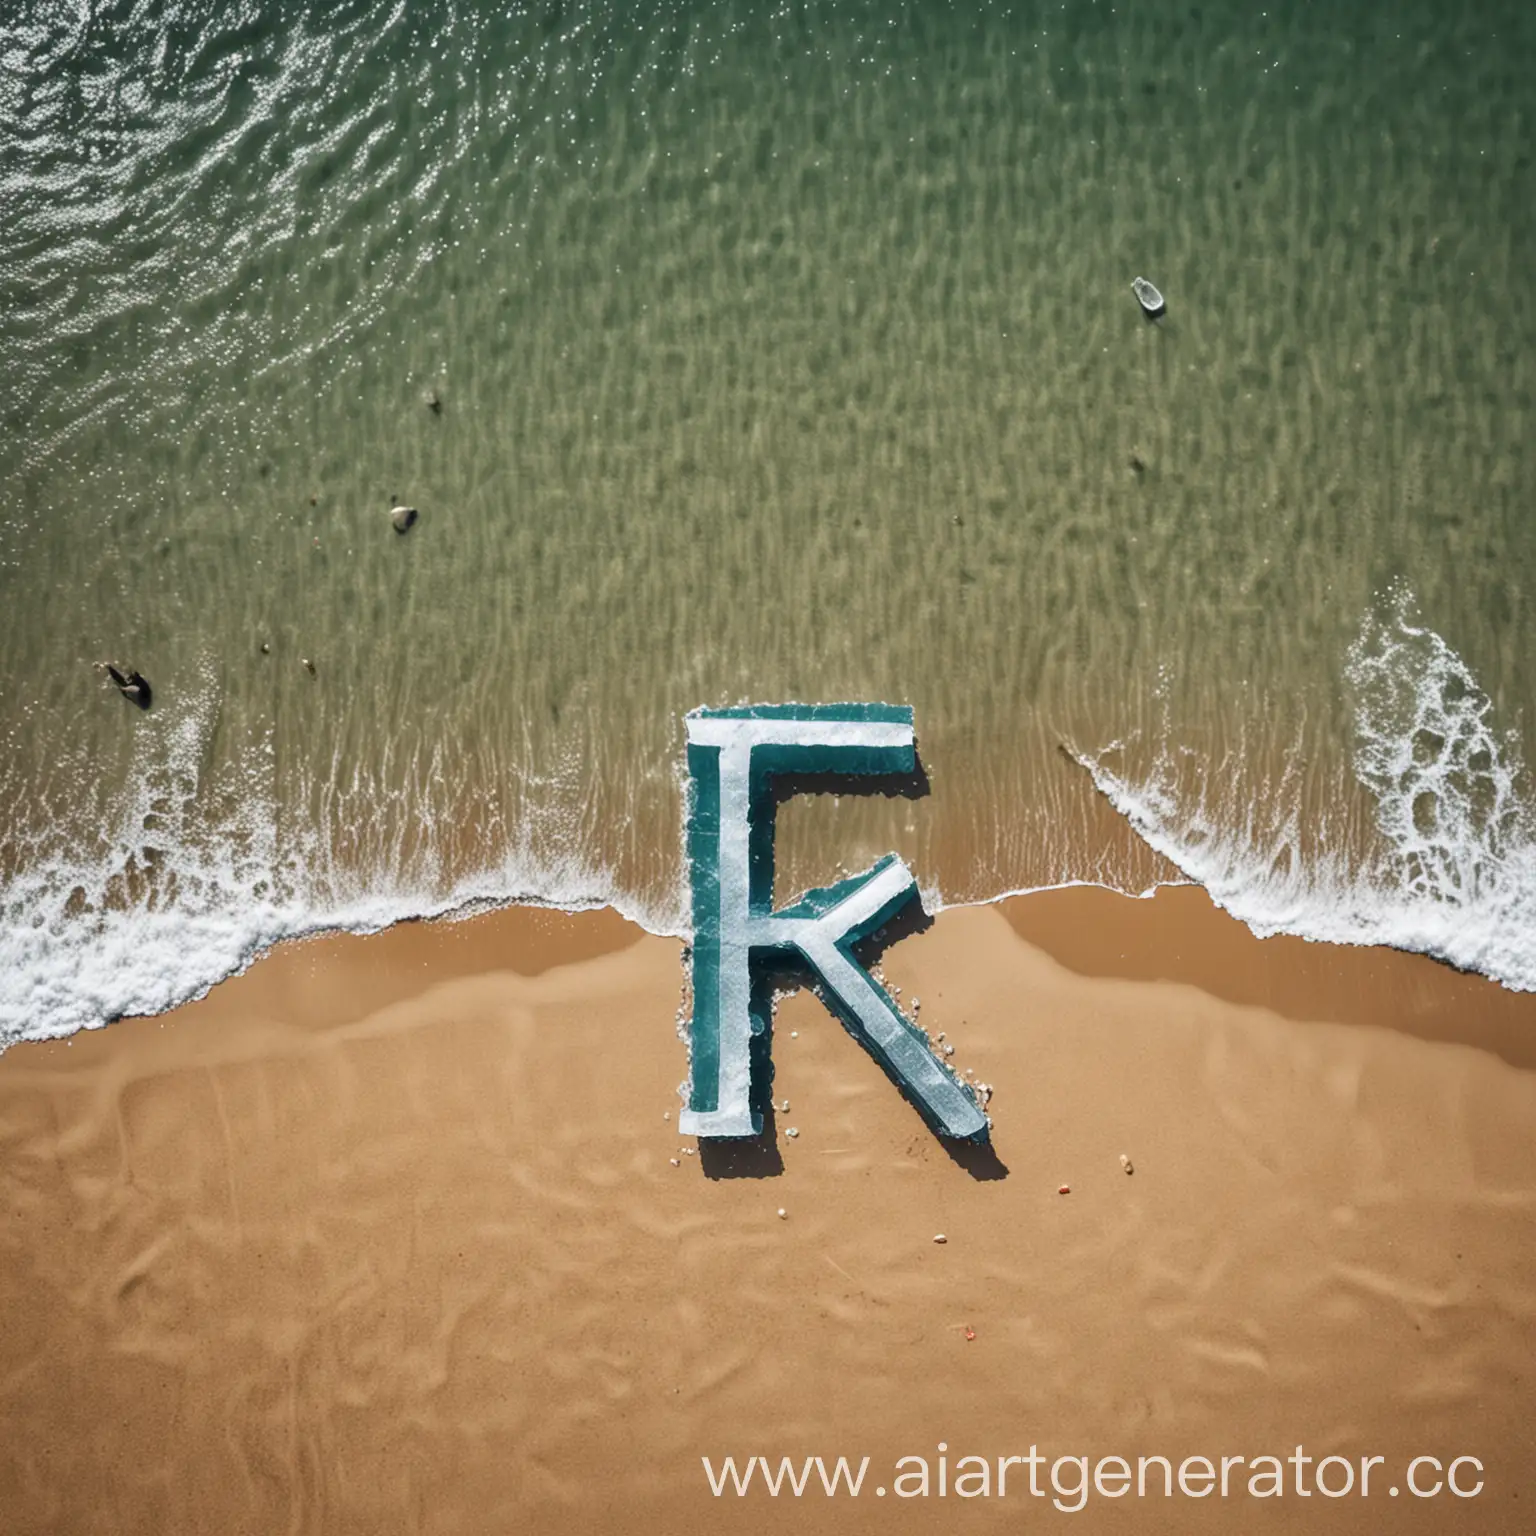 Ice-Figure-Letter-R-under-Beach-Umbrella-on-Sea-Background